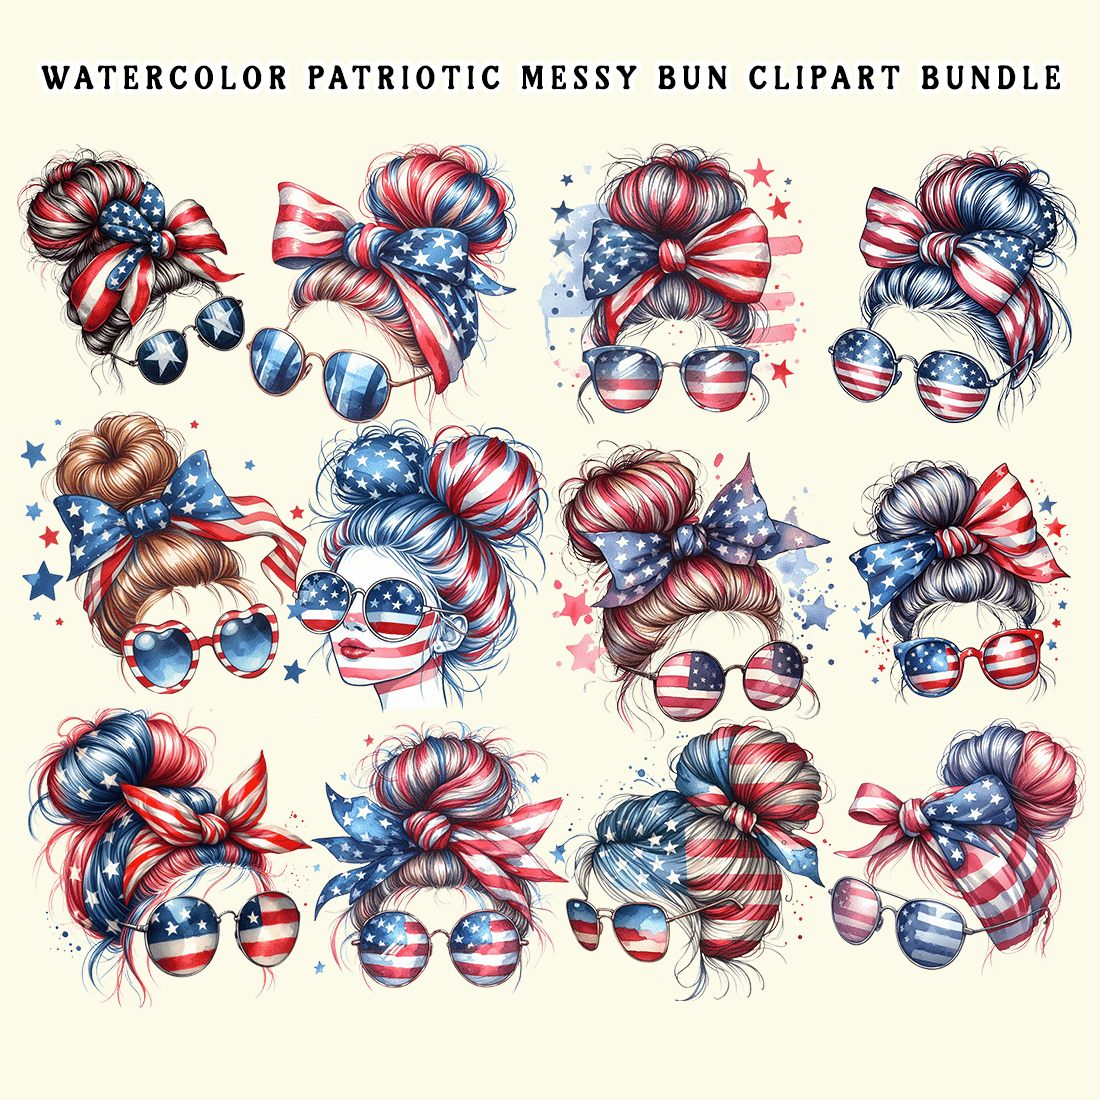 Watercolor Patriotic Messy Bun Clipart Bundle preview image.